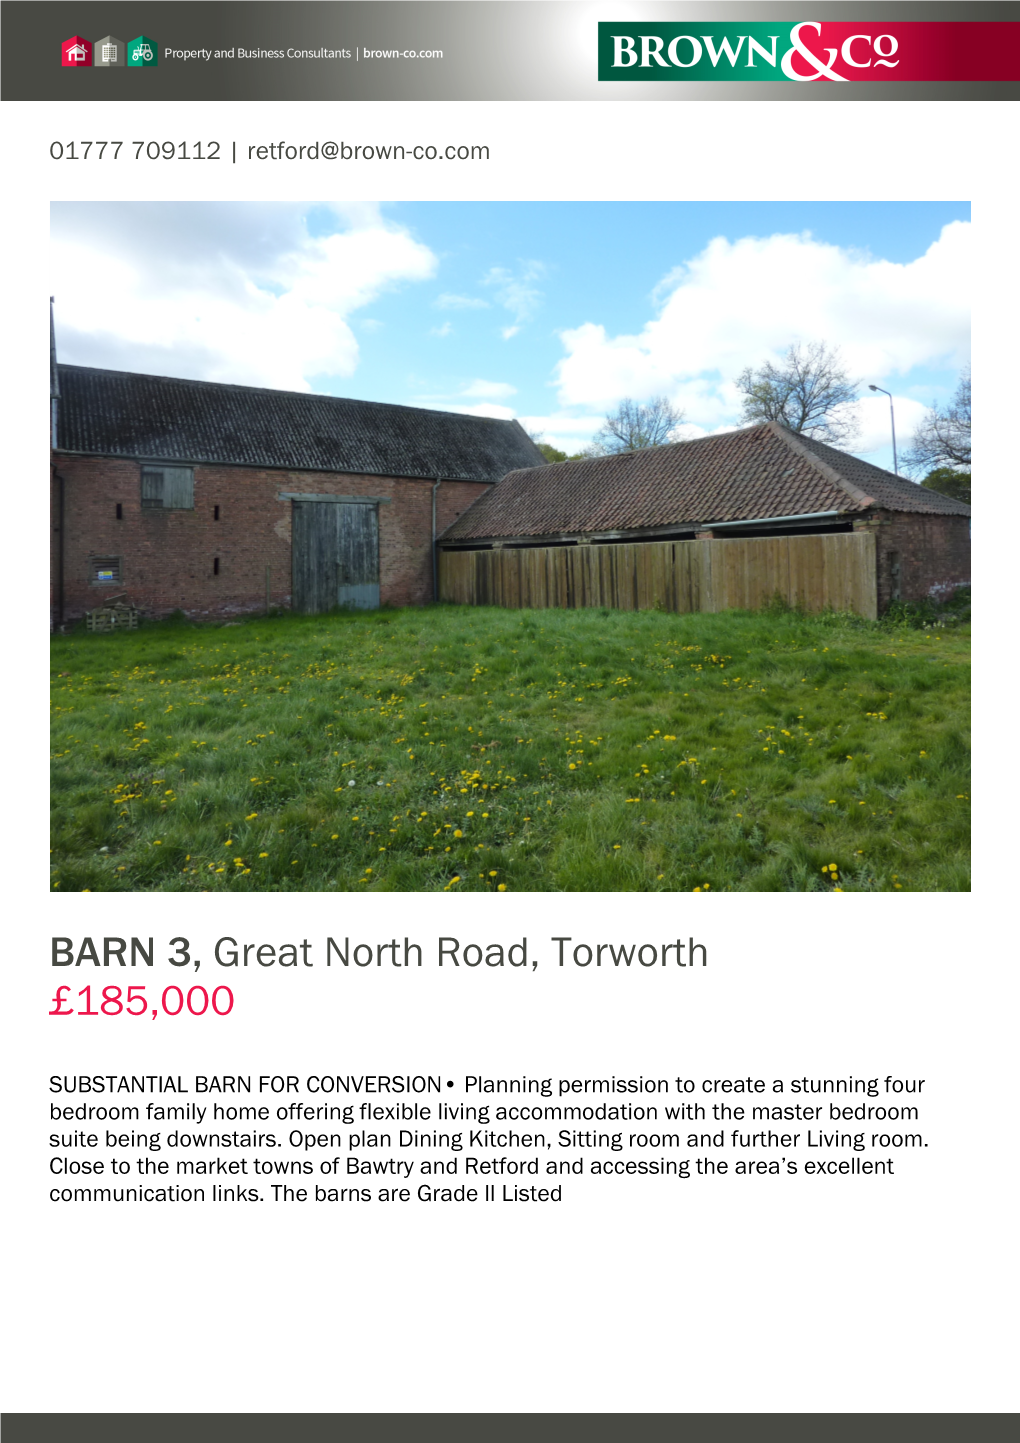 BARN 3, Great North Road, Torworth £185,000